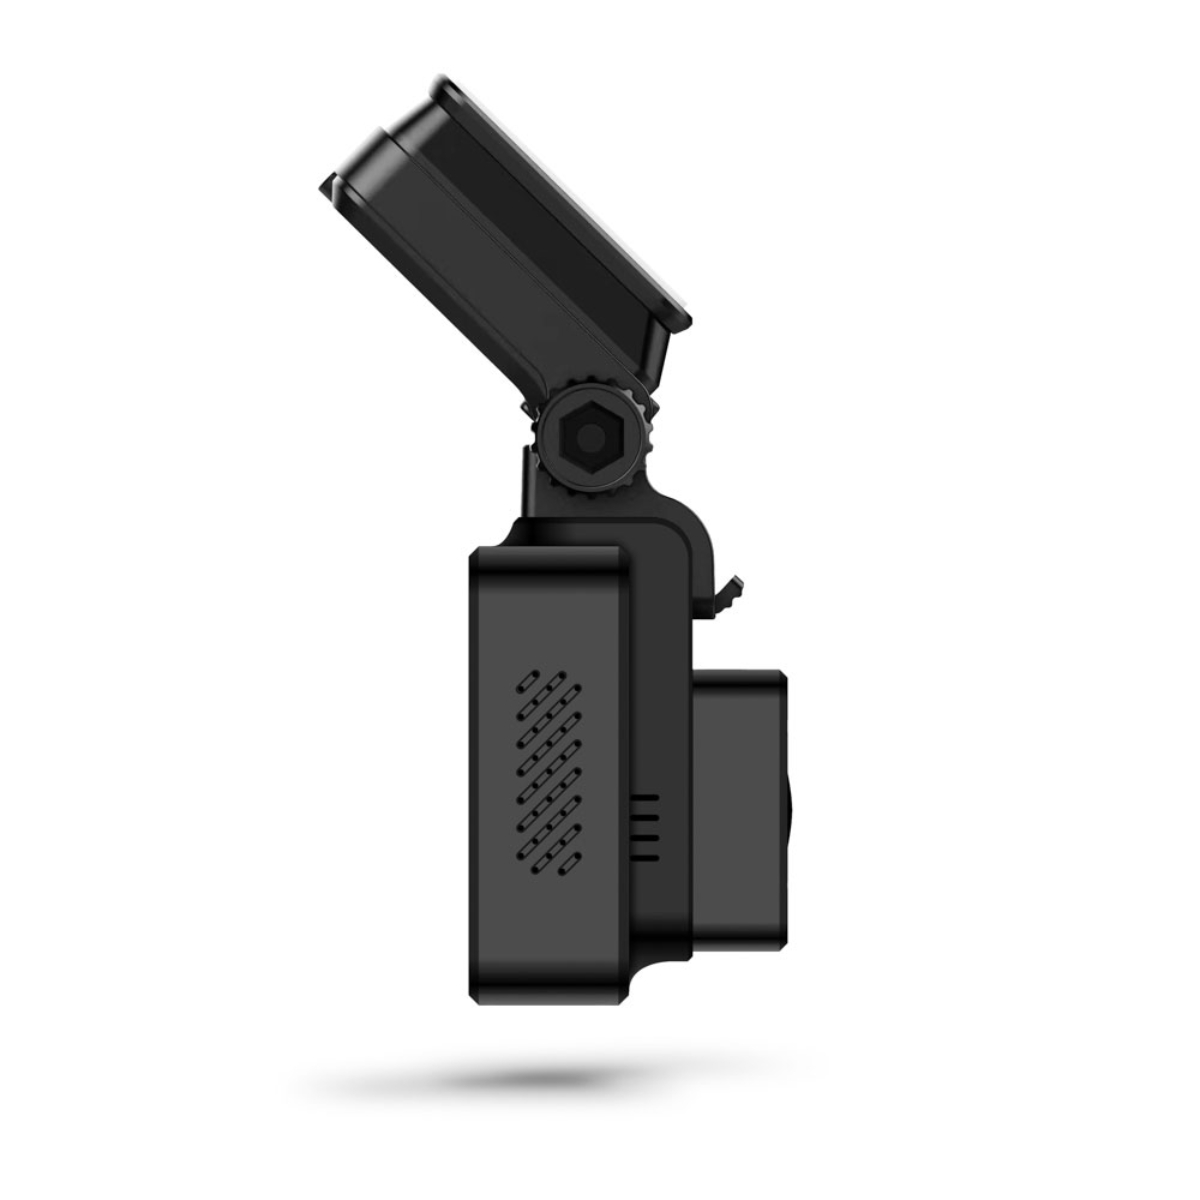 4K Black Dashcam XBLITZ Display